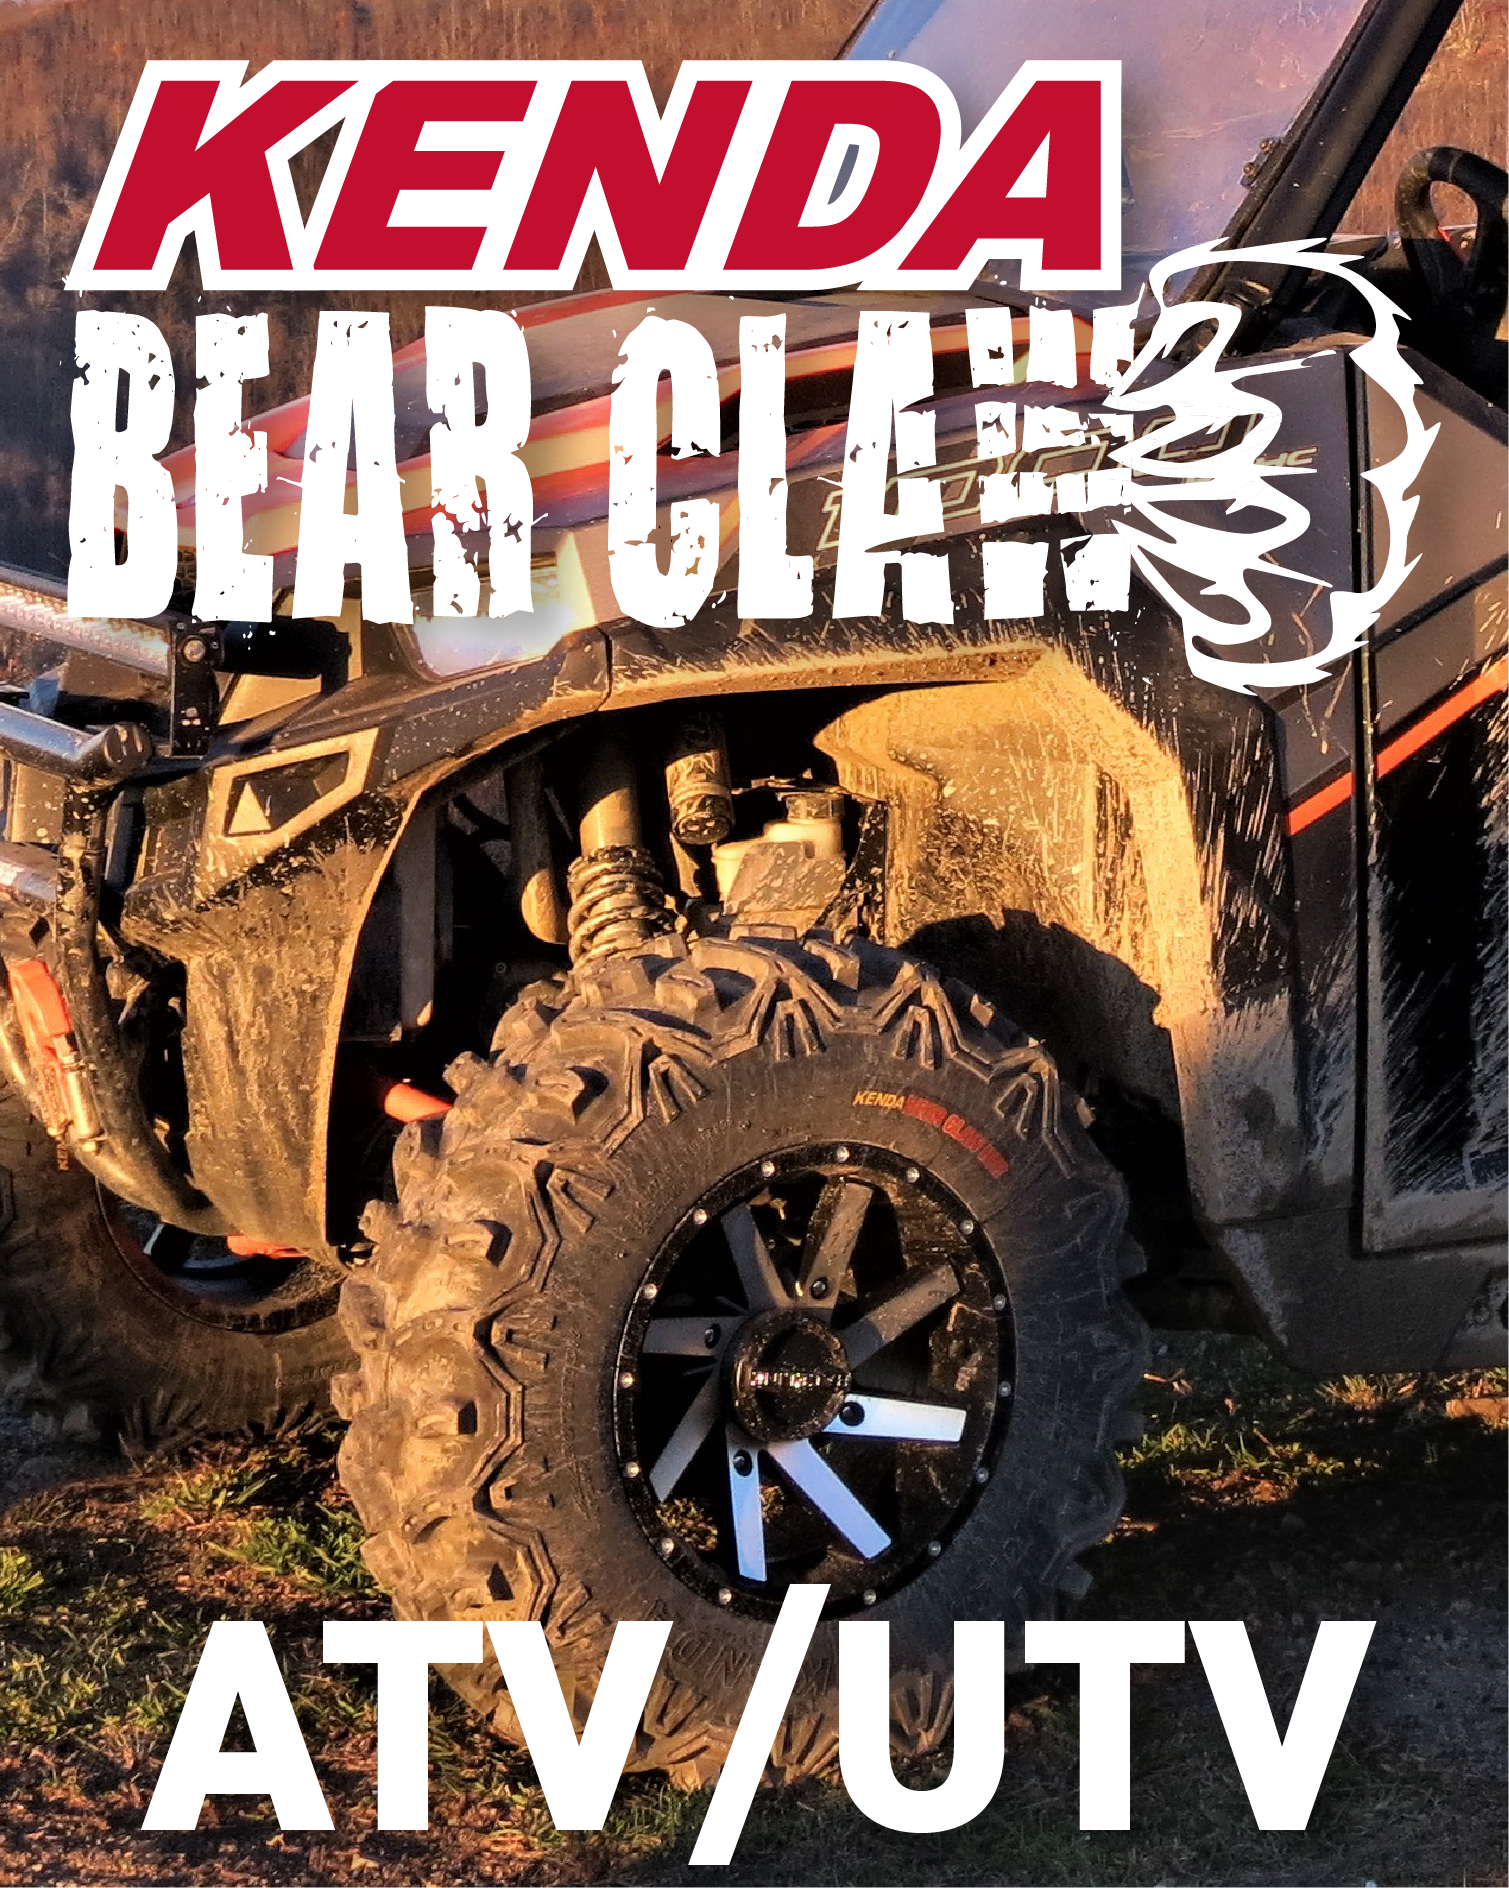 Kenda Bear Claw EX 24x11-10 Rear ATV 6 PLY Tires Bearclaw 24x11x10 - 2 Pack